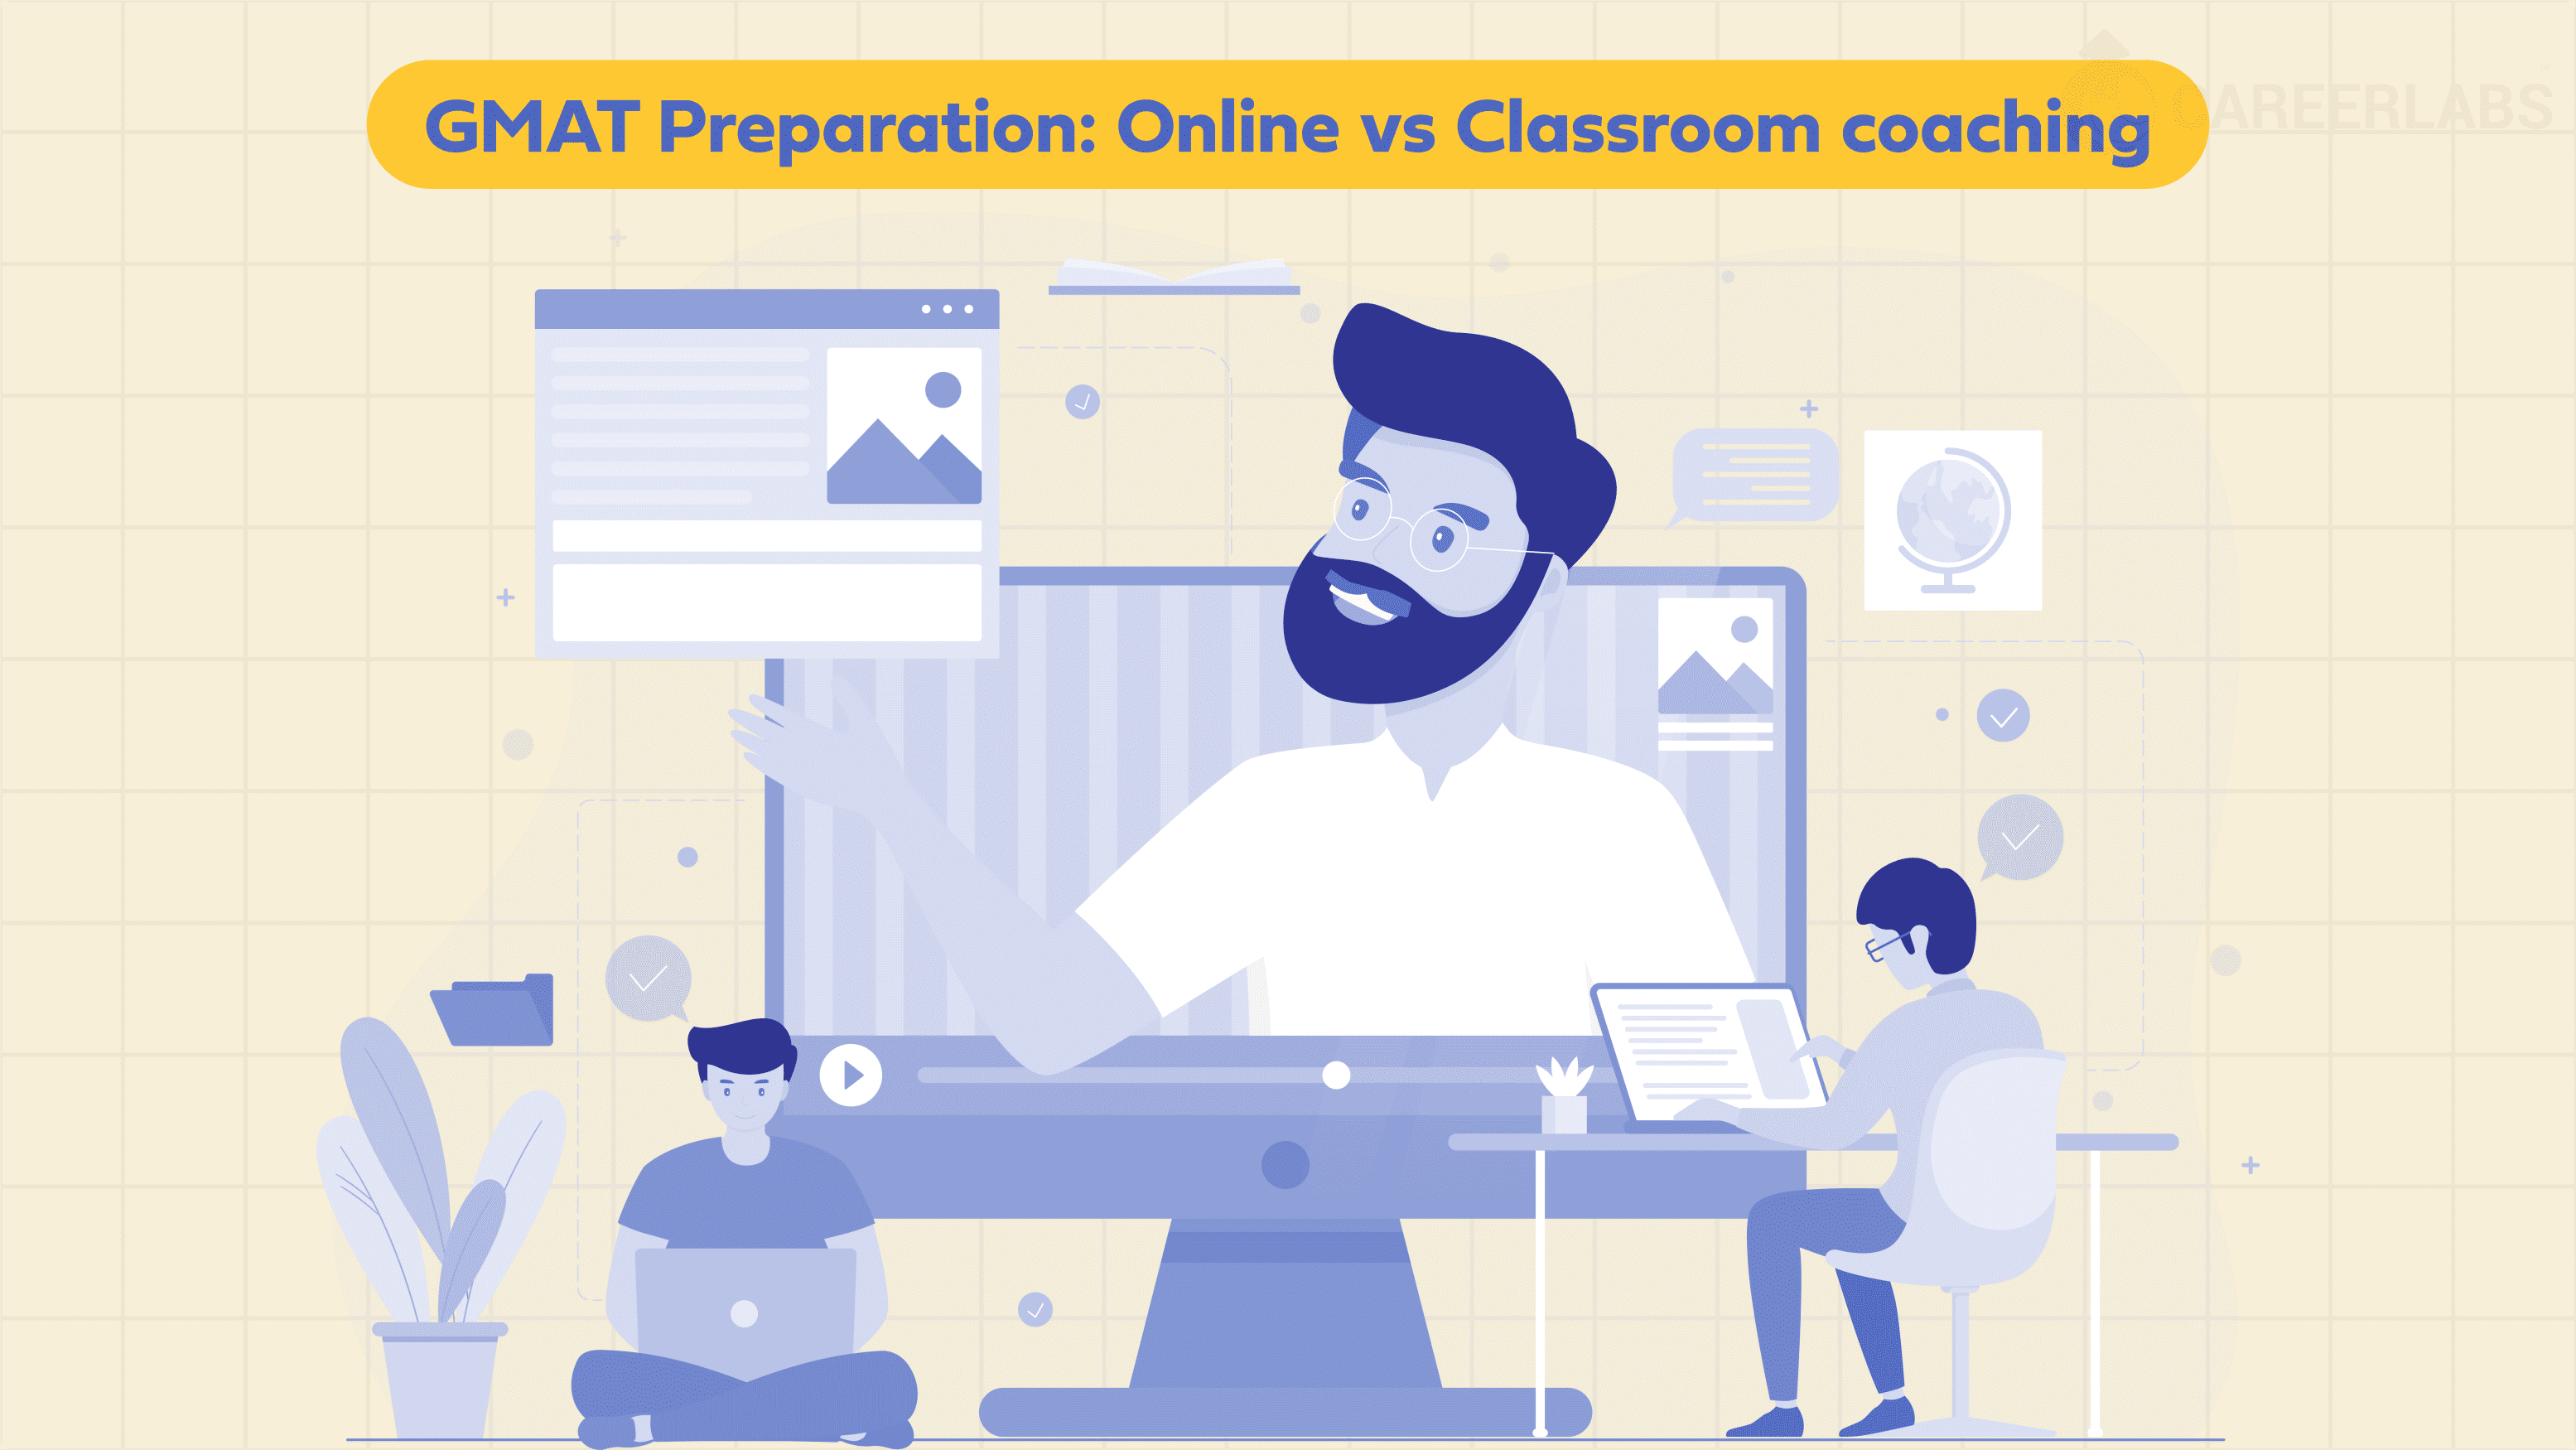 GMAT Preparation: Online Versus Classroom Coaching